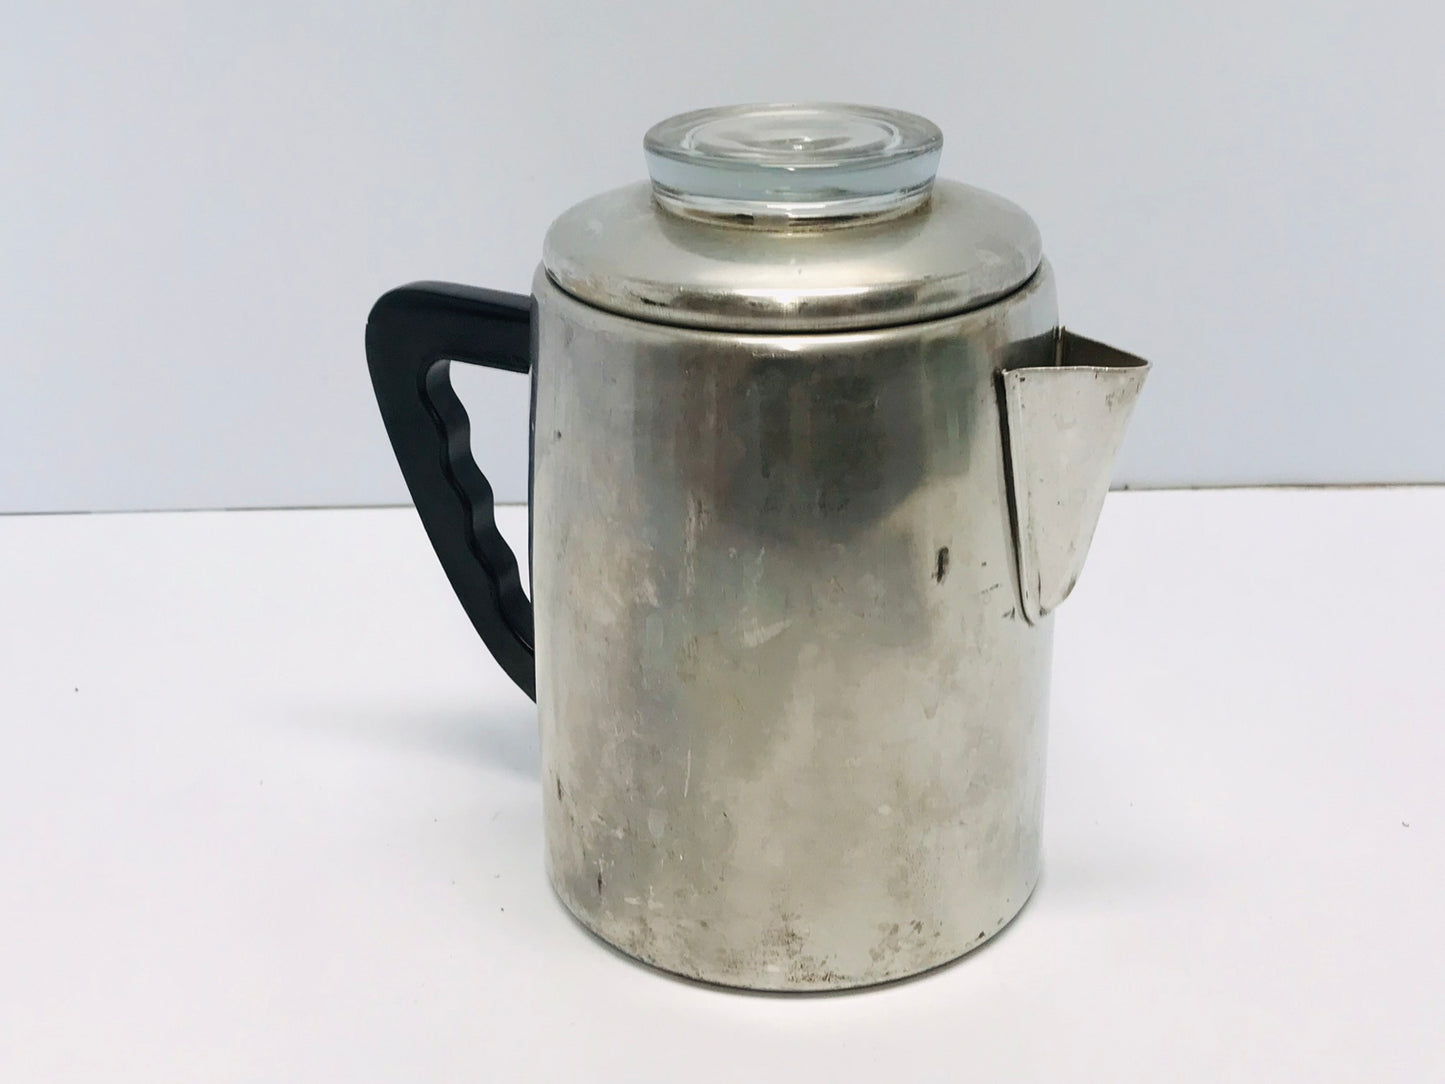 Camping Coffee Pot Perolator Vintage 1960's 4-6 Cup Bakelite Handle Aluminum Rustproof Fast Heat Up Outdoor Use